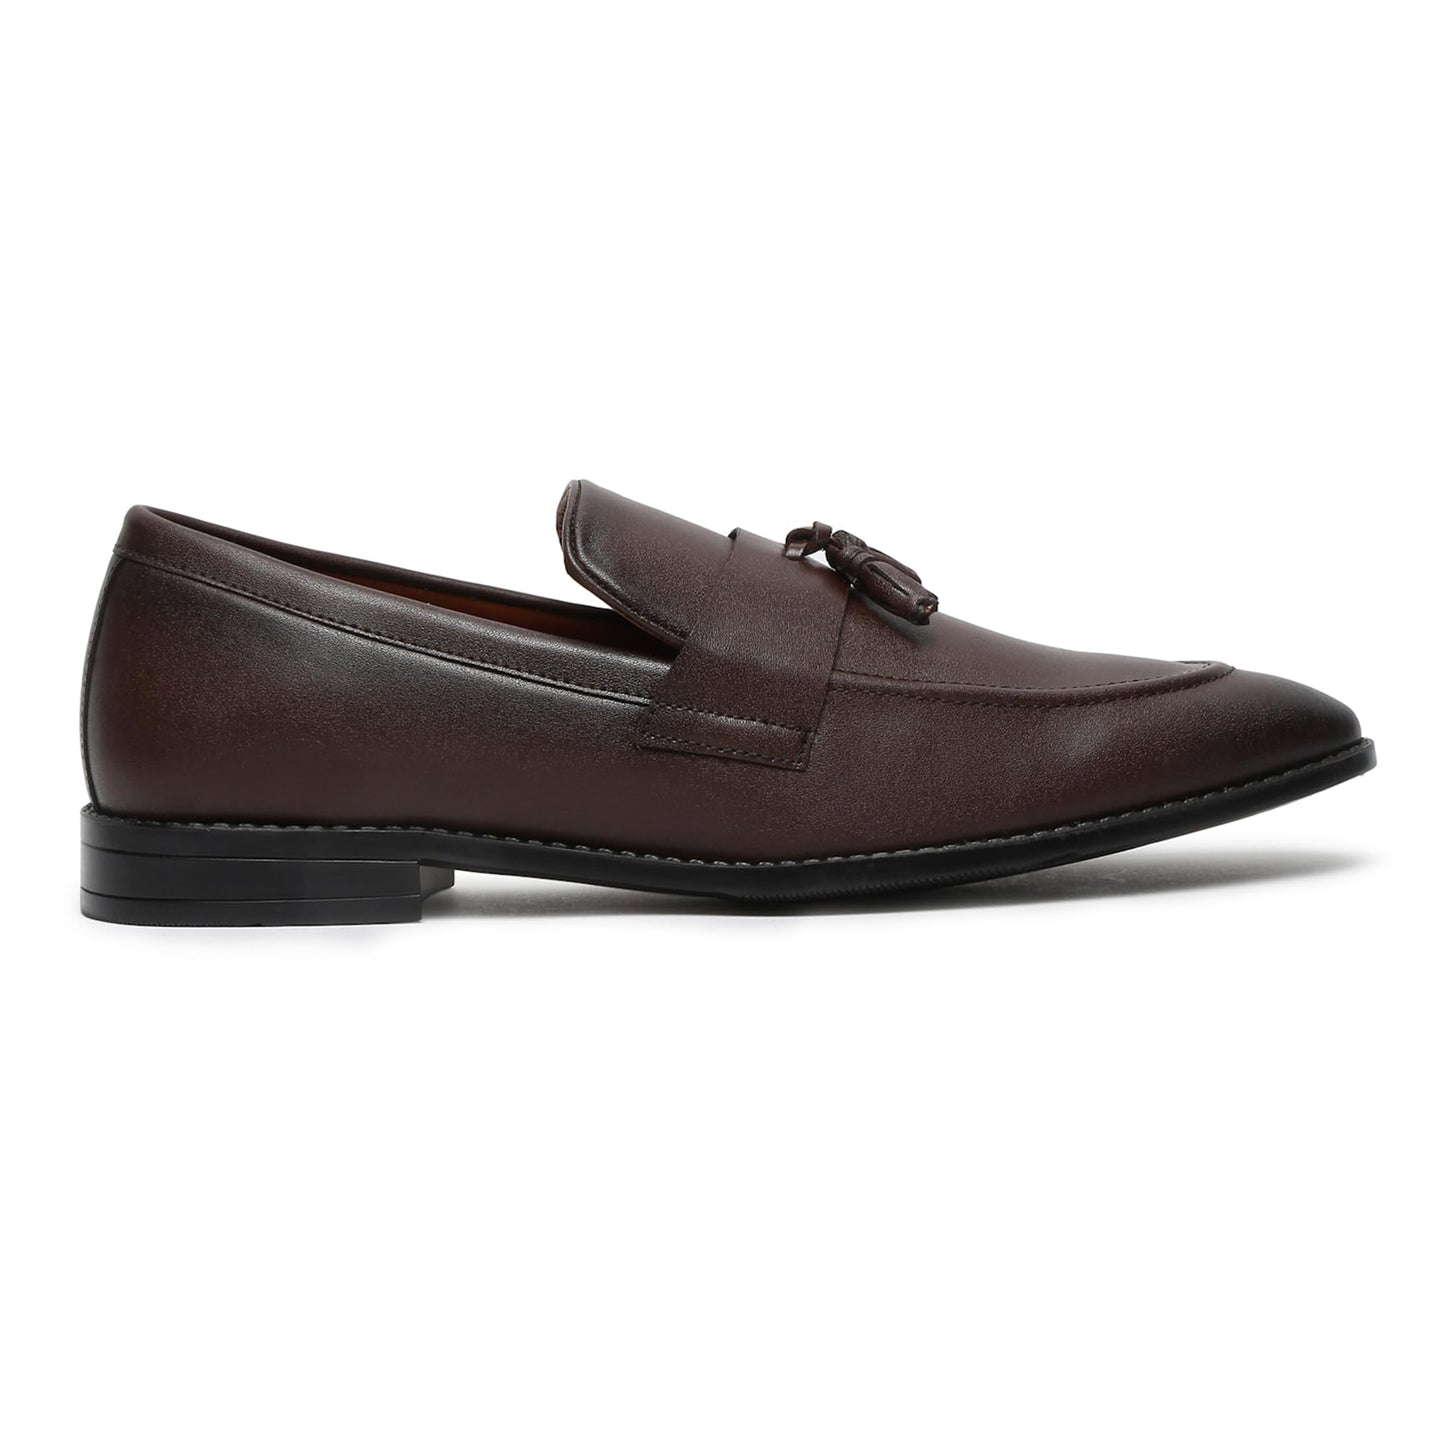 LOUIS STITCH Men's Brunette Brown Shoes Tassel Style Comfortable Moccasins for Men